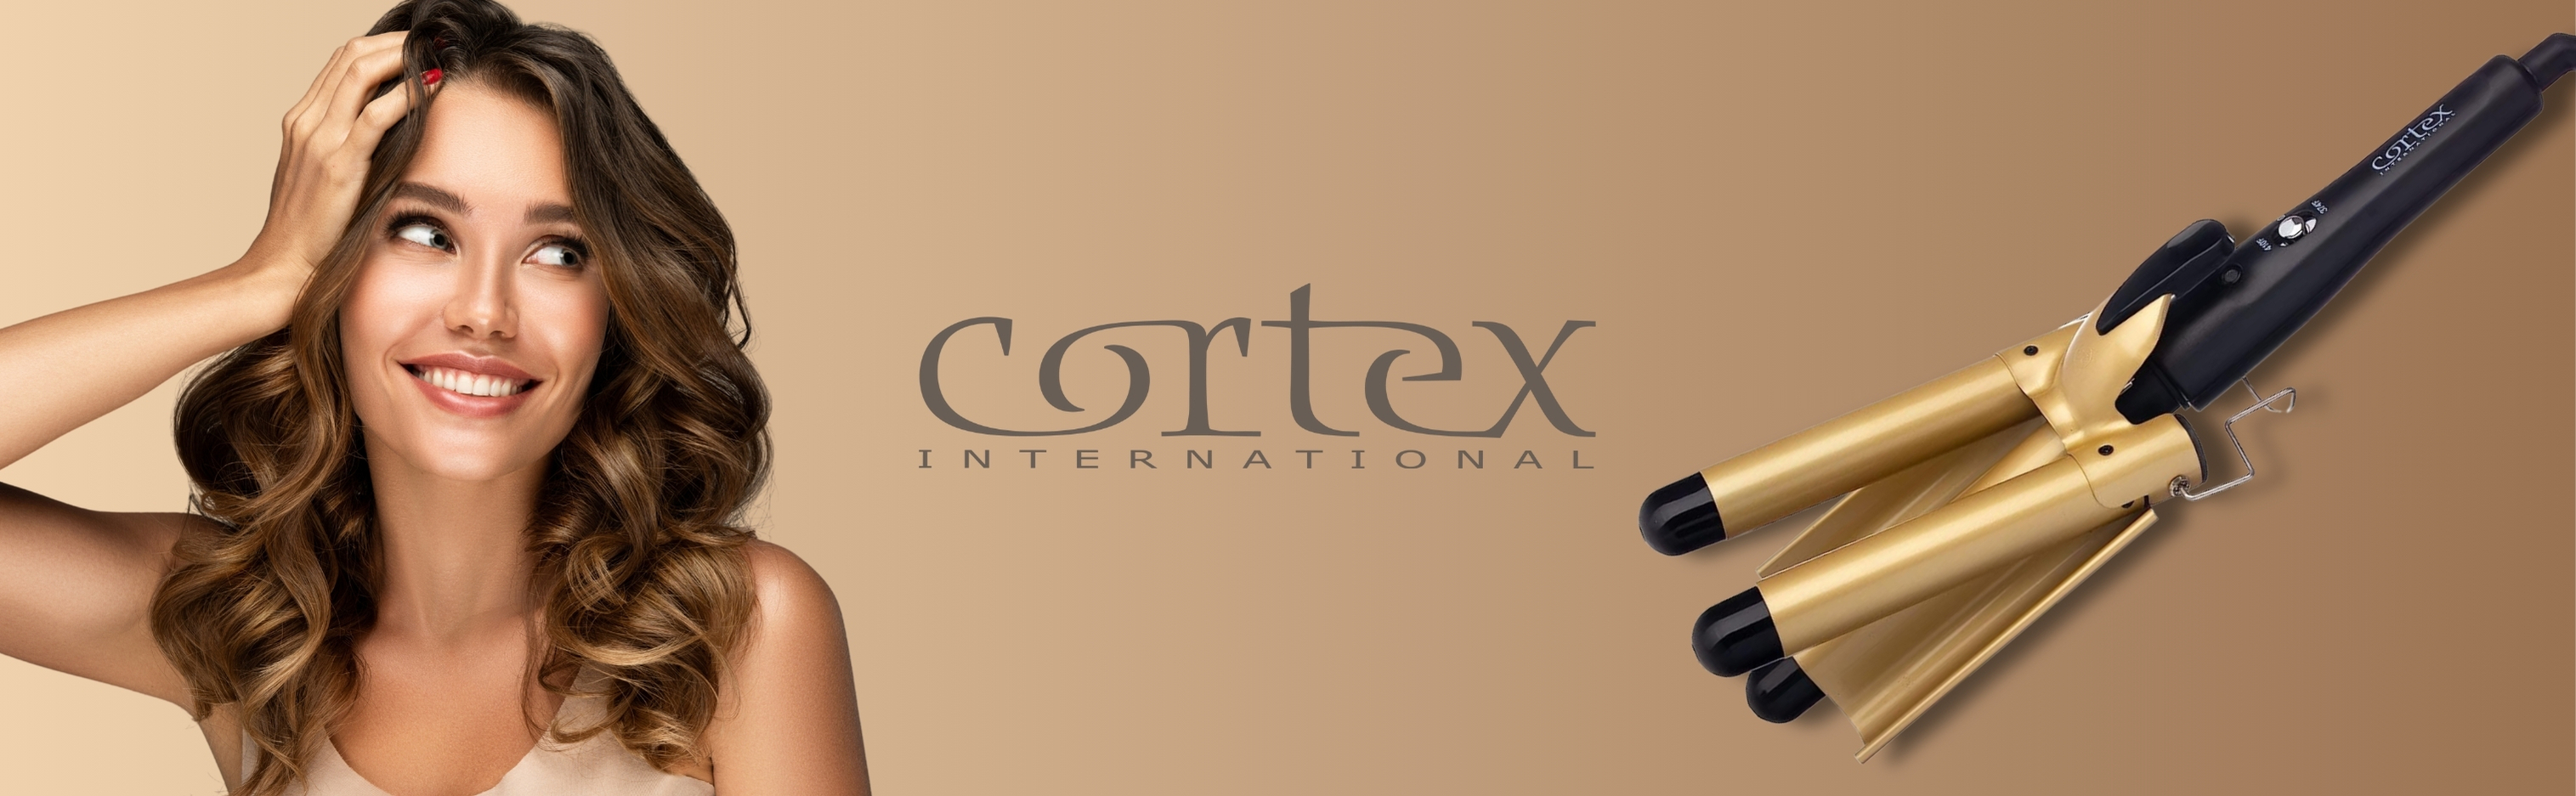 Cortex International